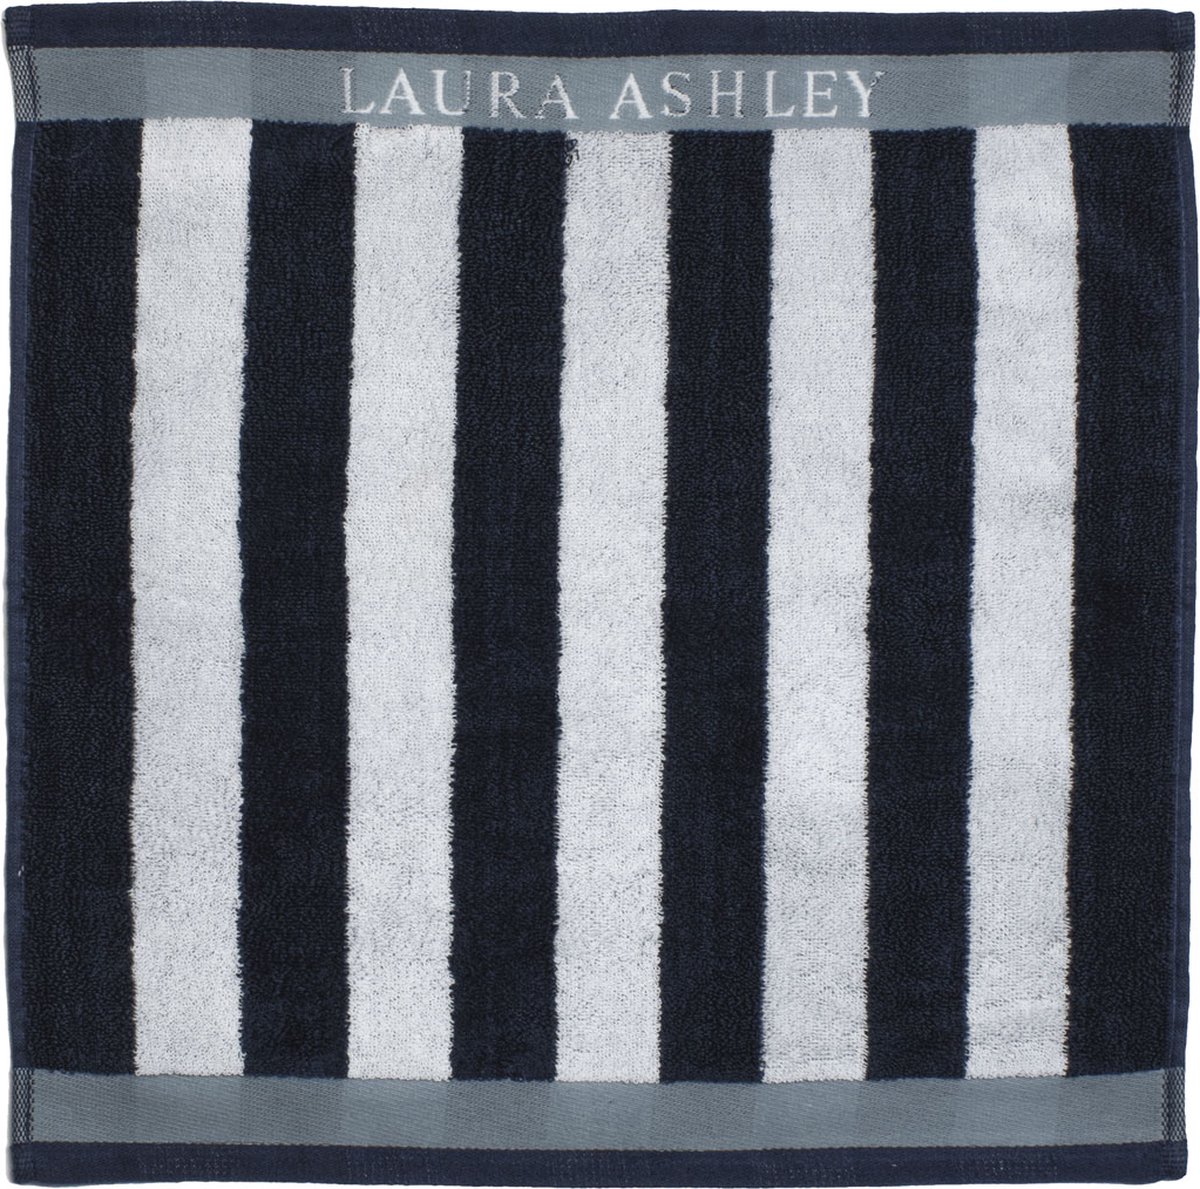 Laura Ashley Keukendoek Midnight Stripe 50 x 50 cm per stuk